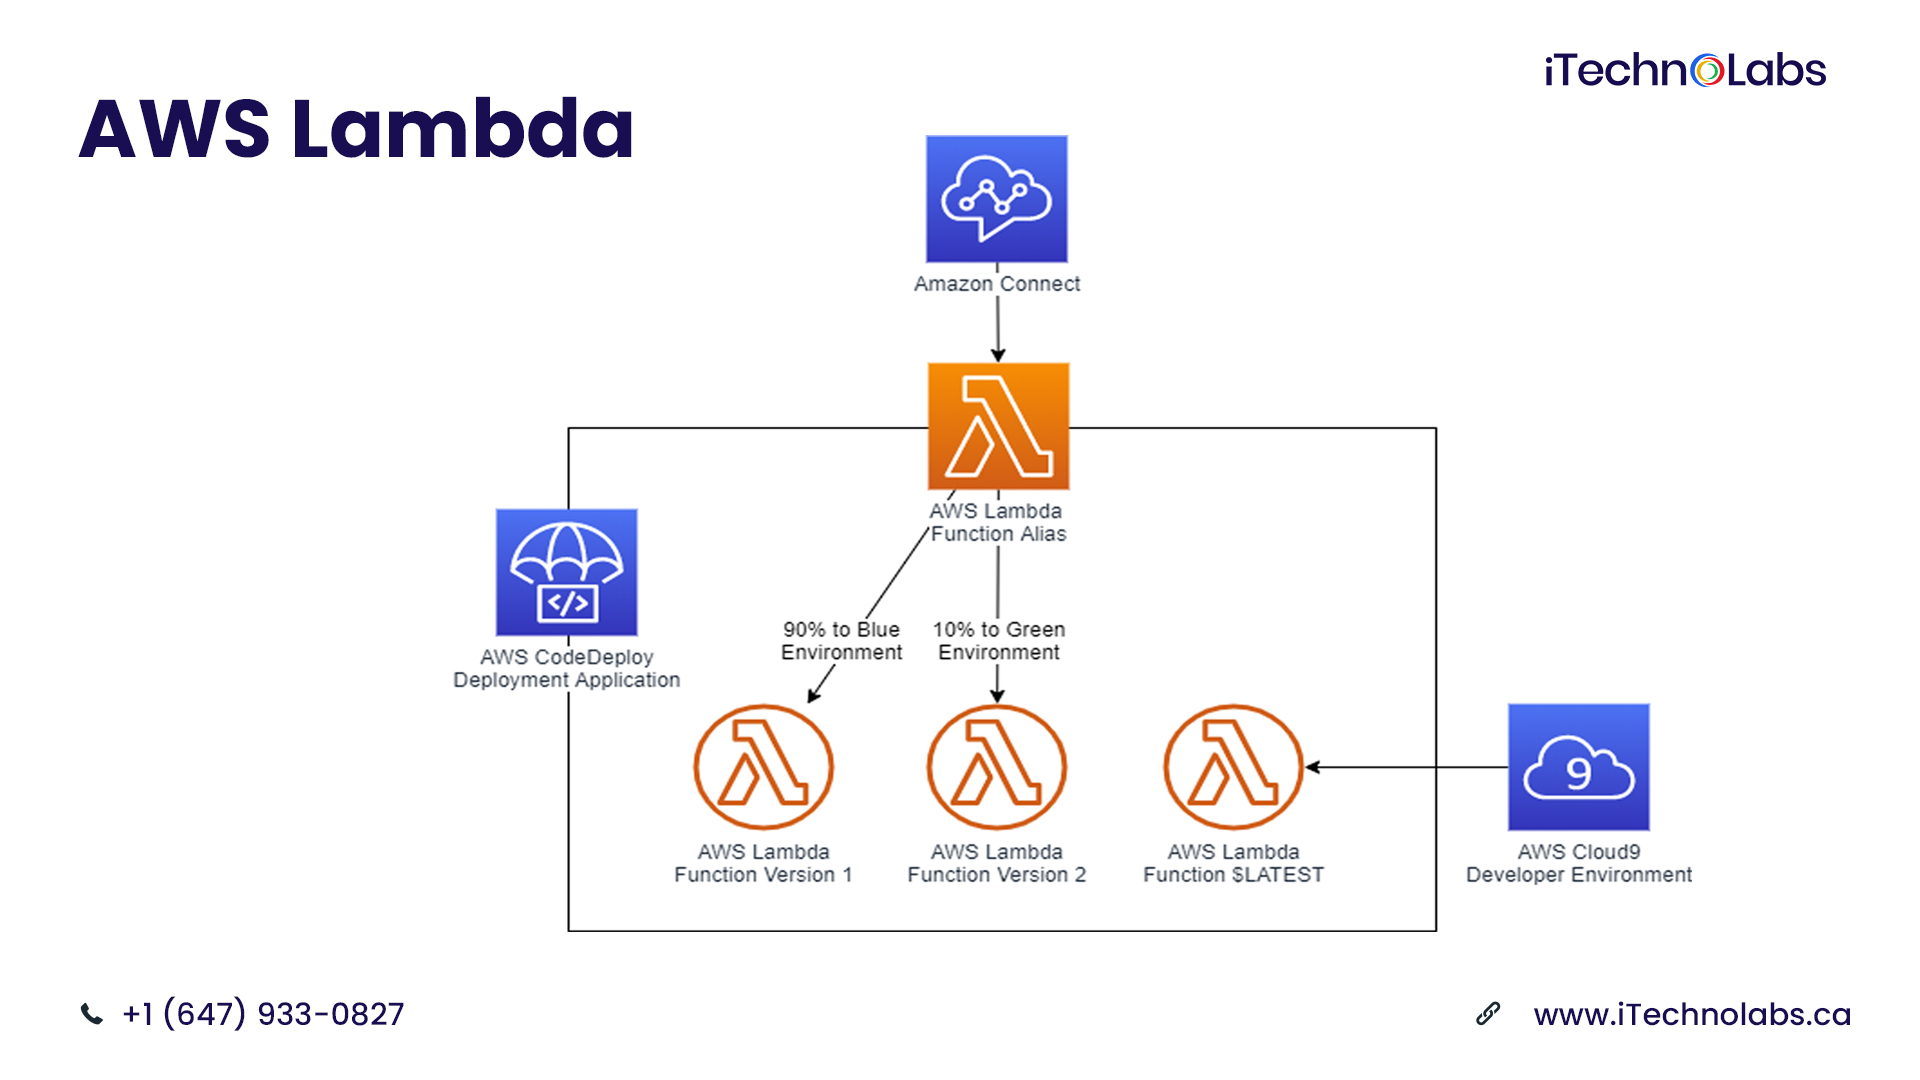 aws lambda aws services itechnolabs mobile app development company